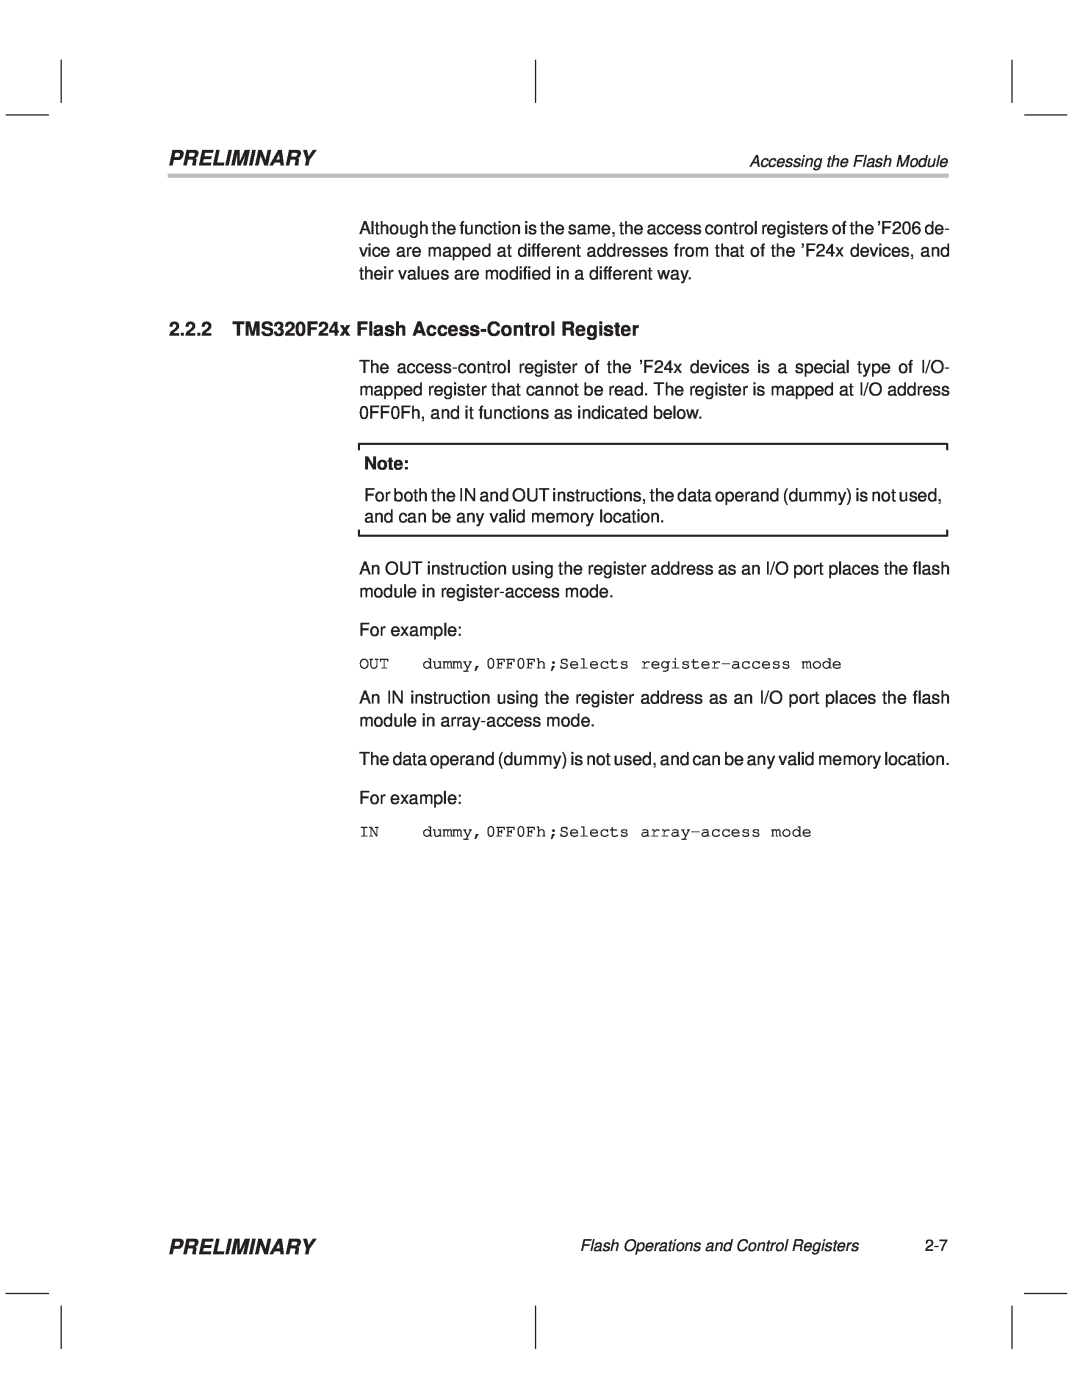 Texas Instruments TMS320F20x/F24x DSP manual 2.2.2 TMS320F24x Flash Access-Control Register, Preliminary 